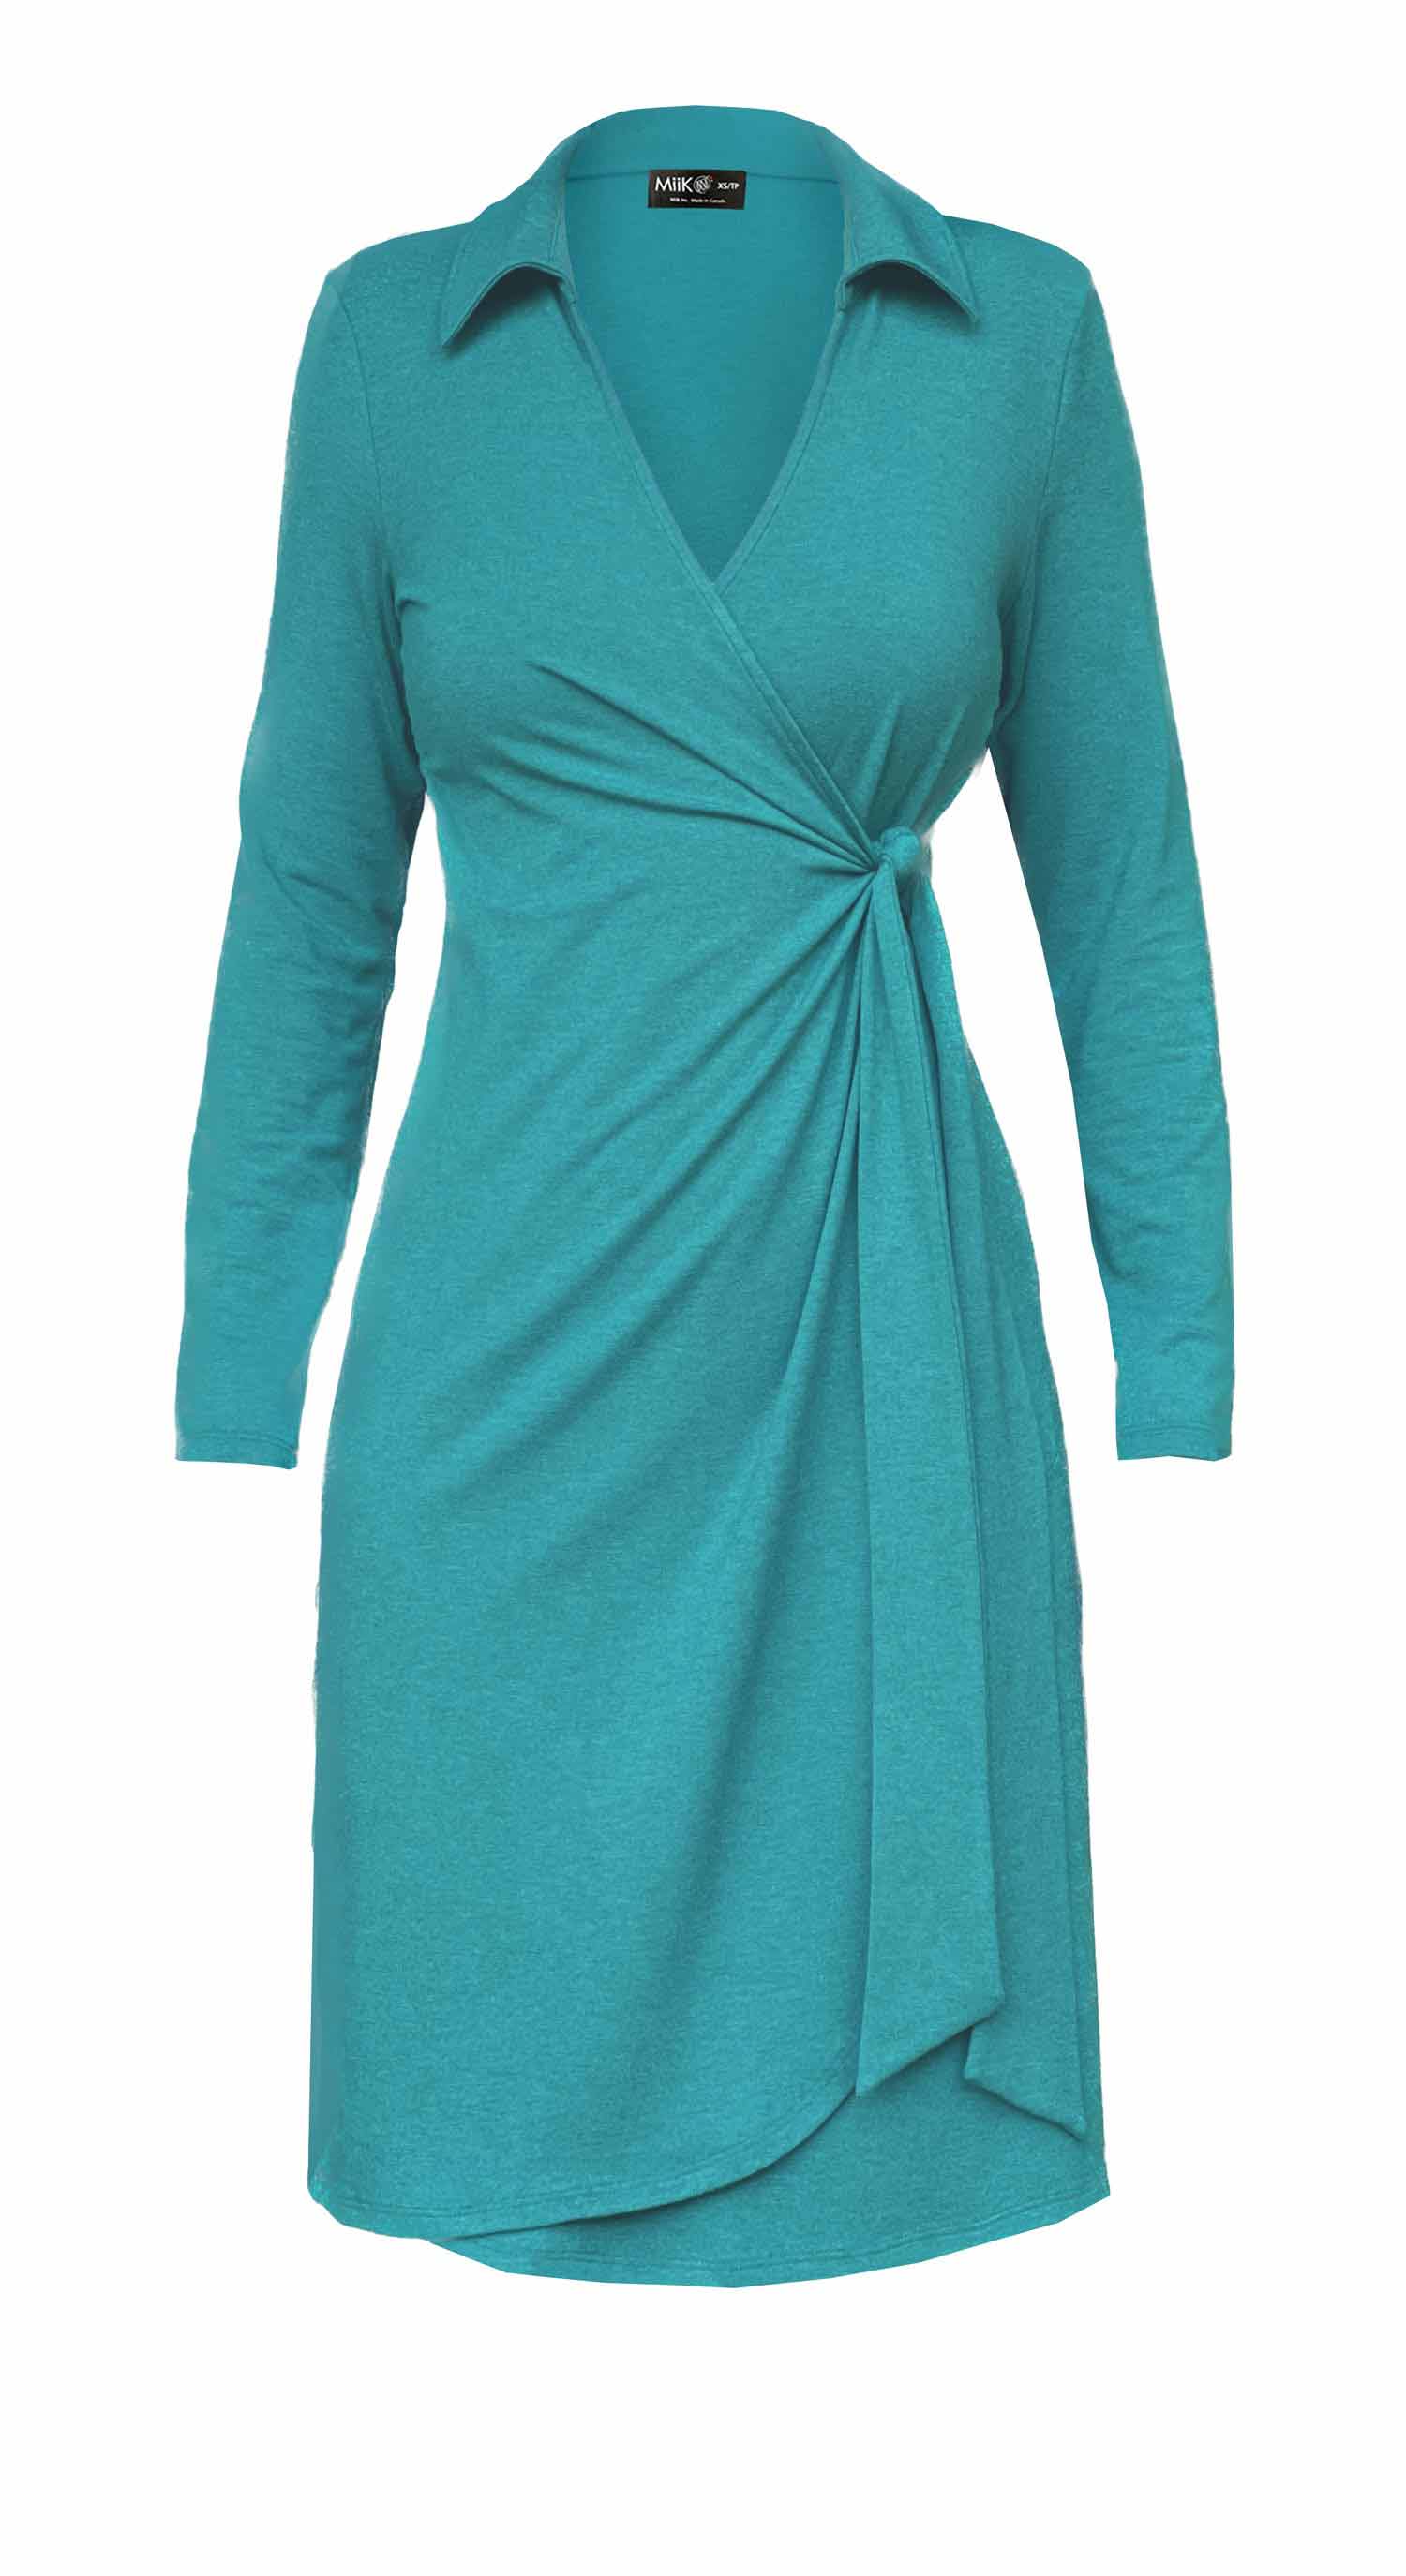 West K Women's Virginia Slip Dress - Xlarge - Teal : Target